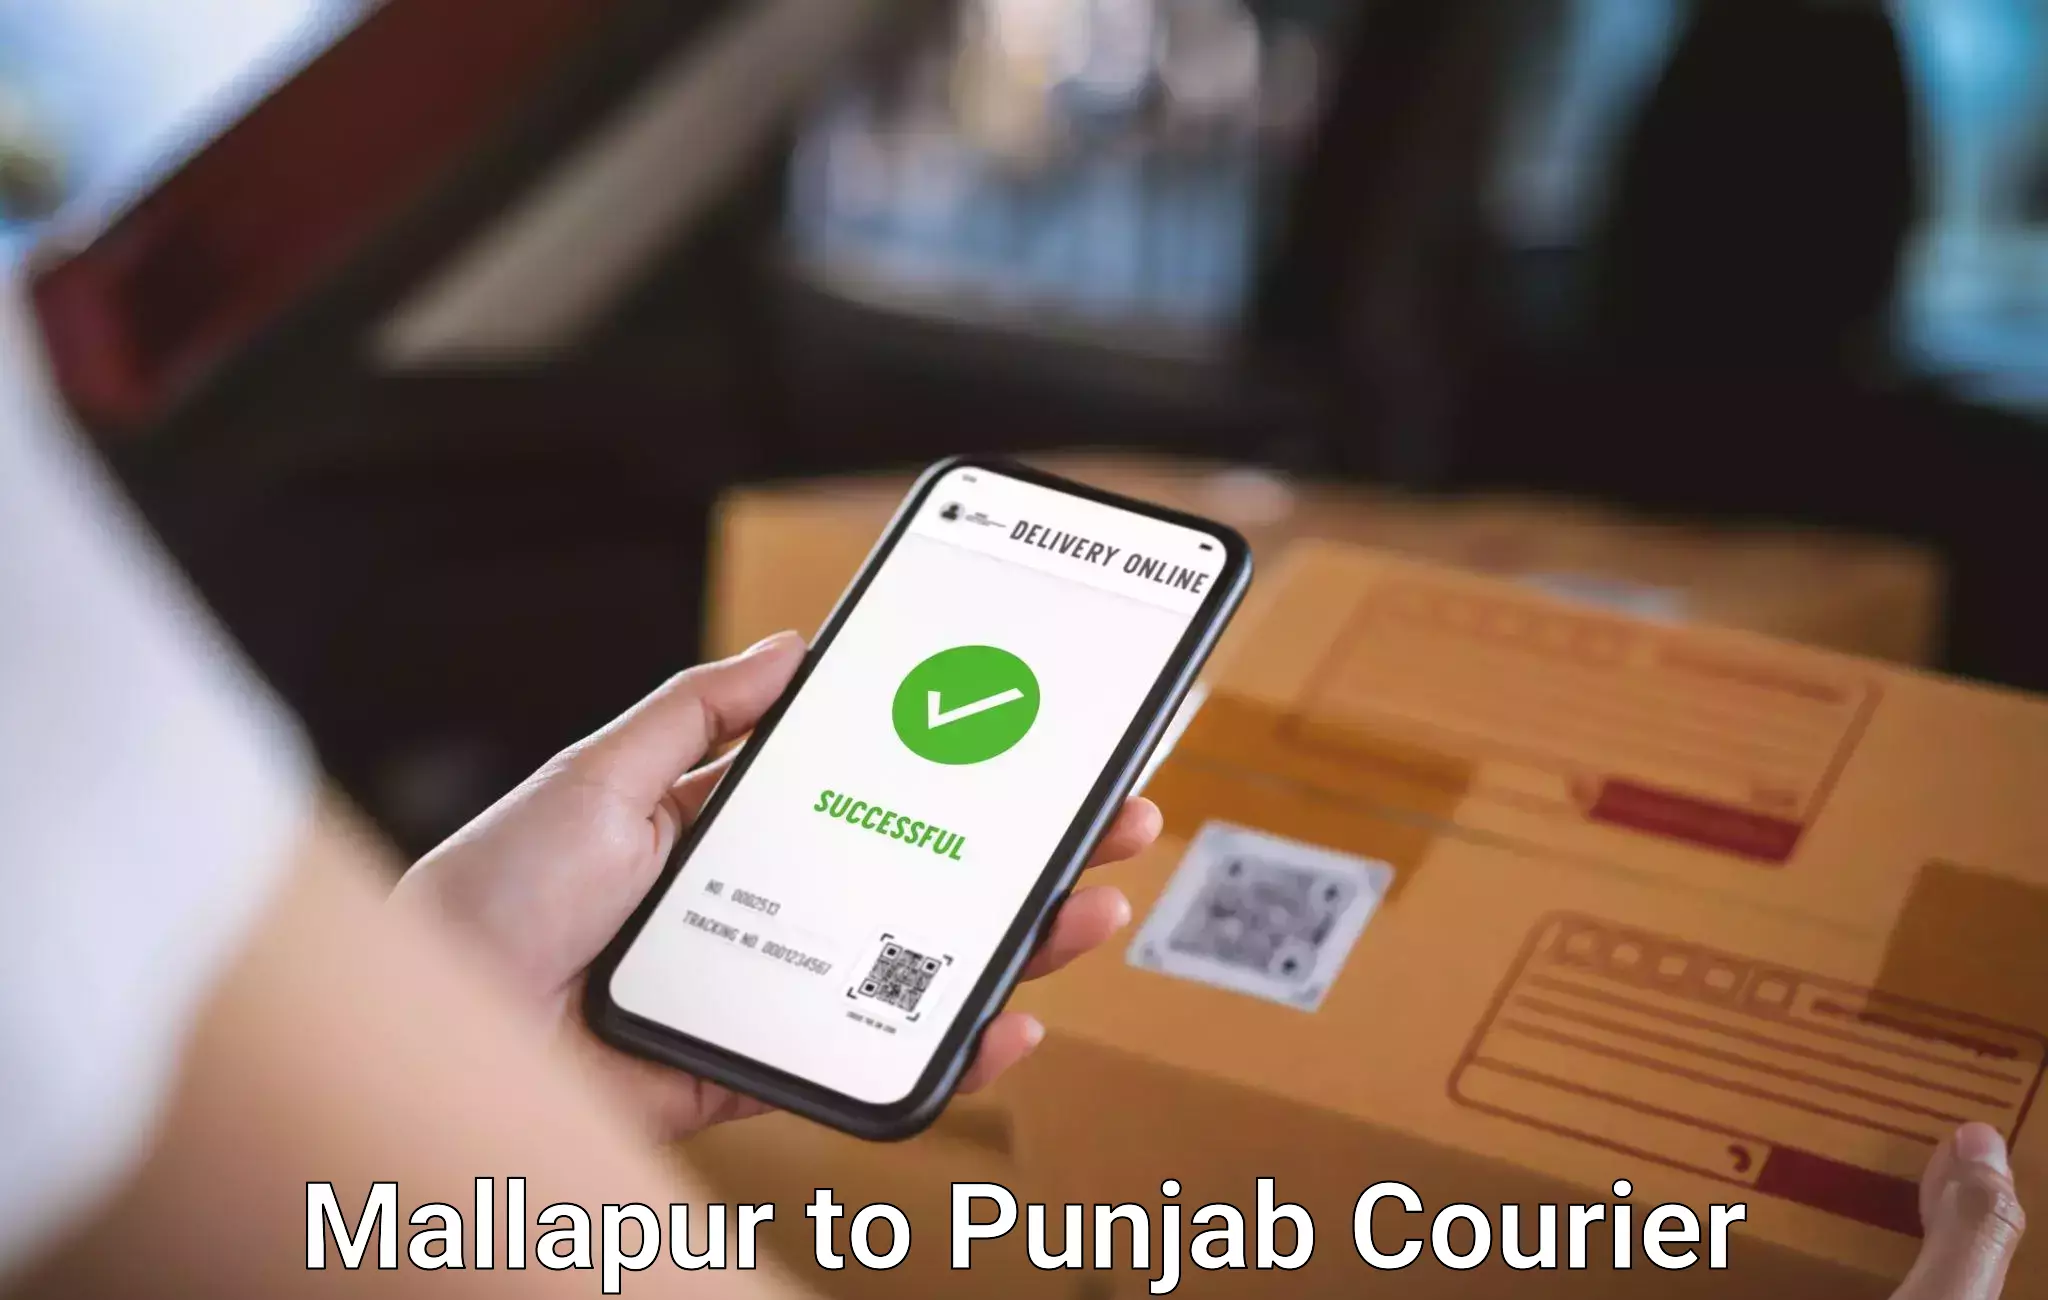 Luggage delivery app Mallapur to Ludhiana